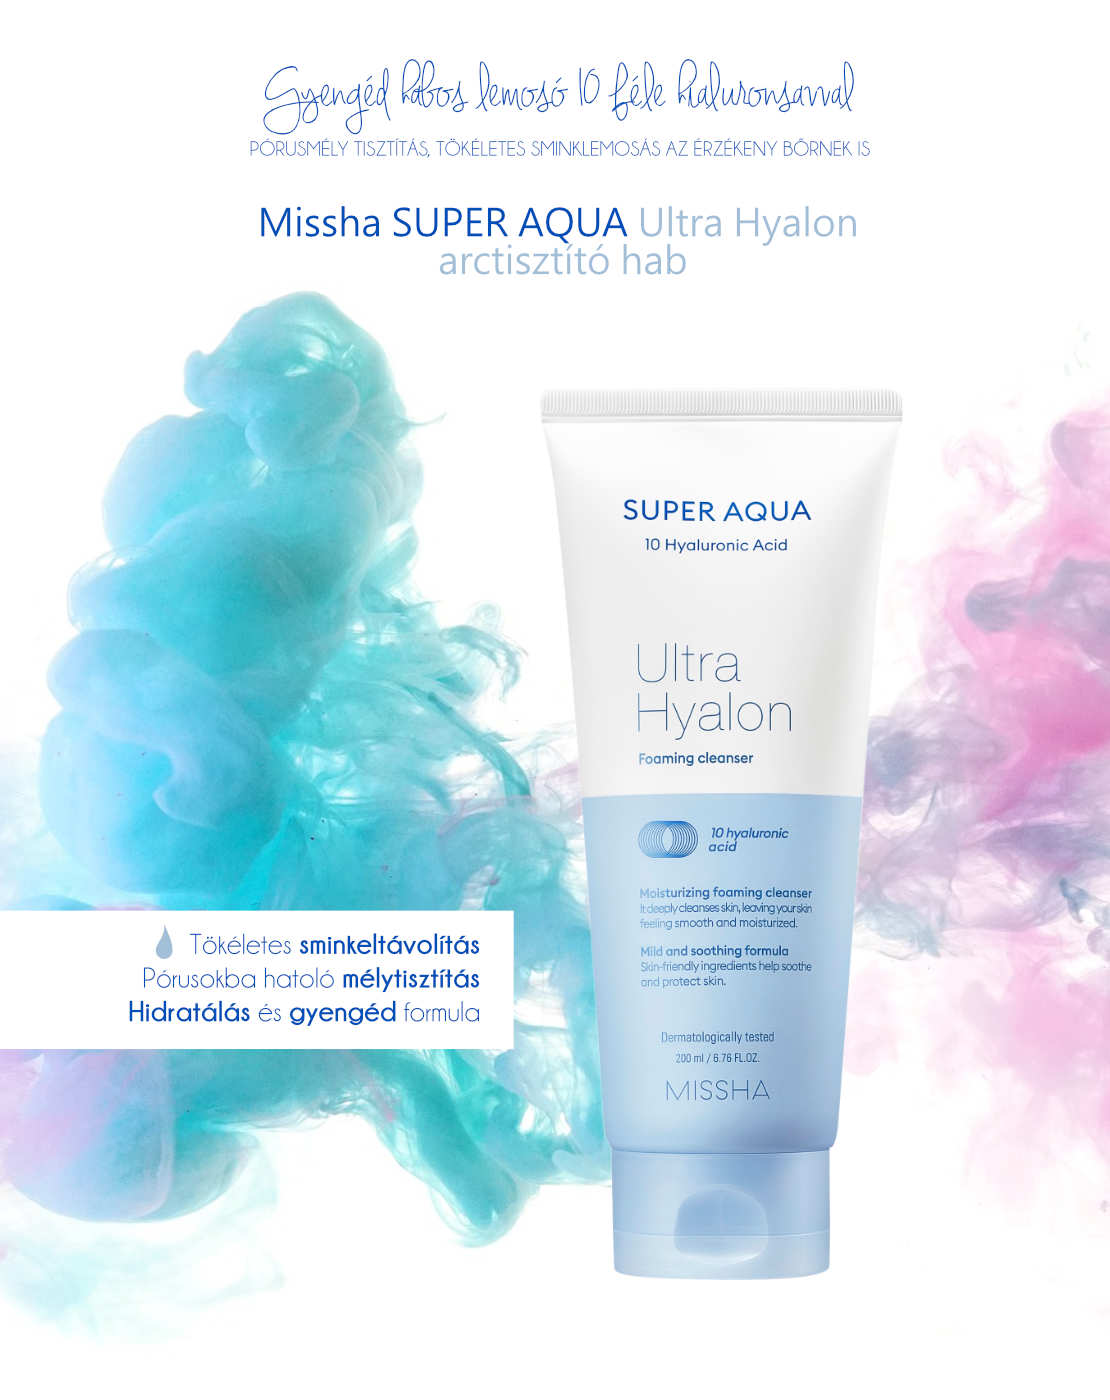 Missha-super-aqua-ultra-hyalon--arctisztito-hab-1